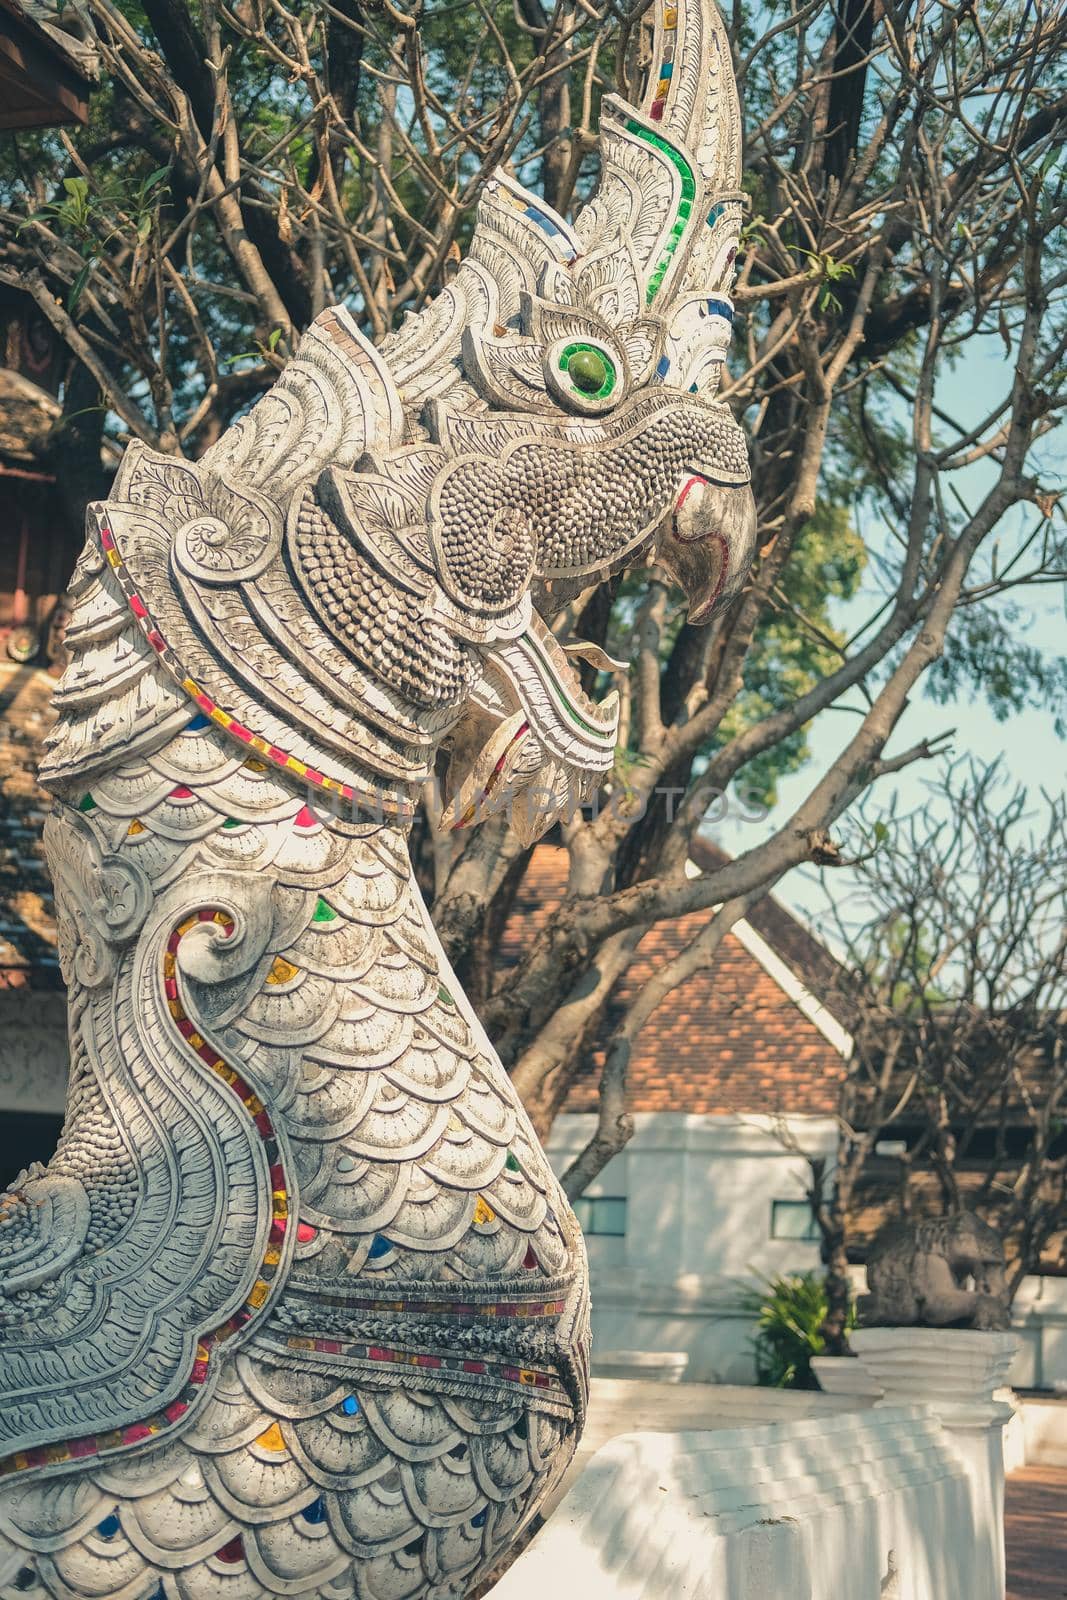 Thai naka naga statue in park in Thailand